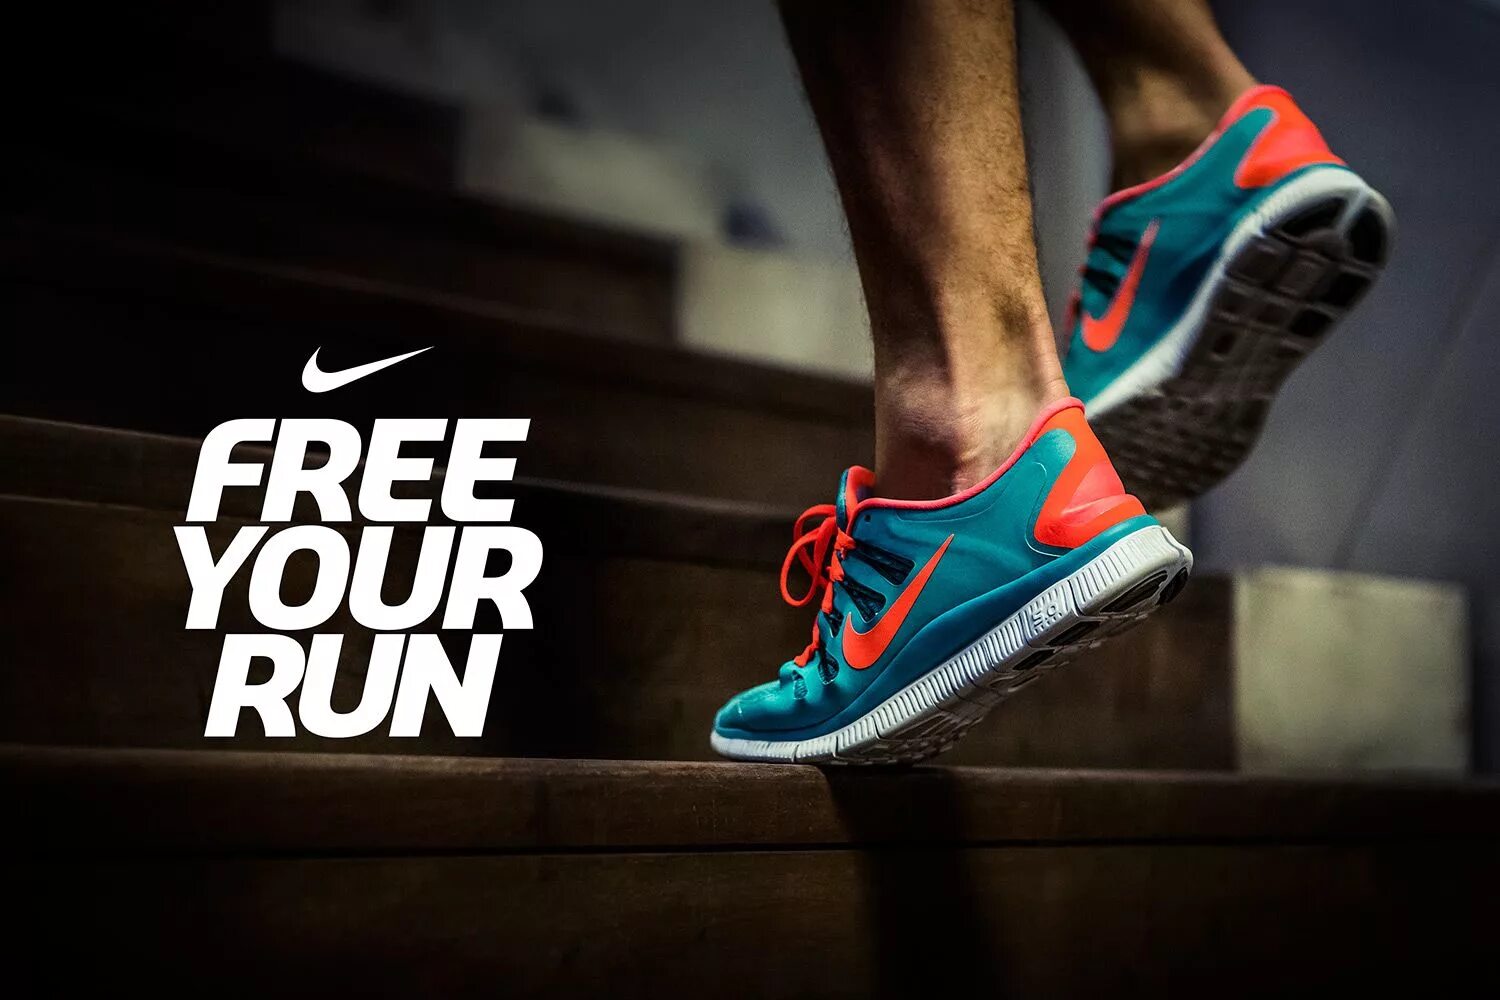 Men Sport Shoes Nike 2021. Реклама кроссовок Nike. Реклама кроссовок найк. Кроссовки Nike реклама. Run the content